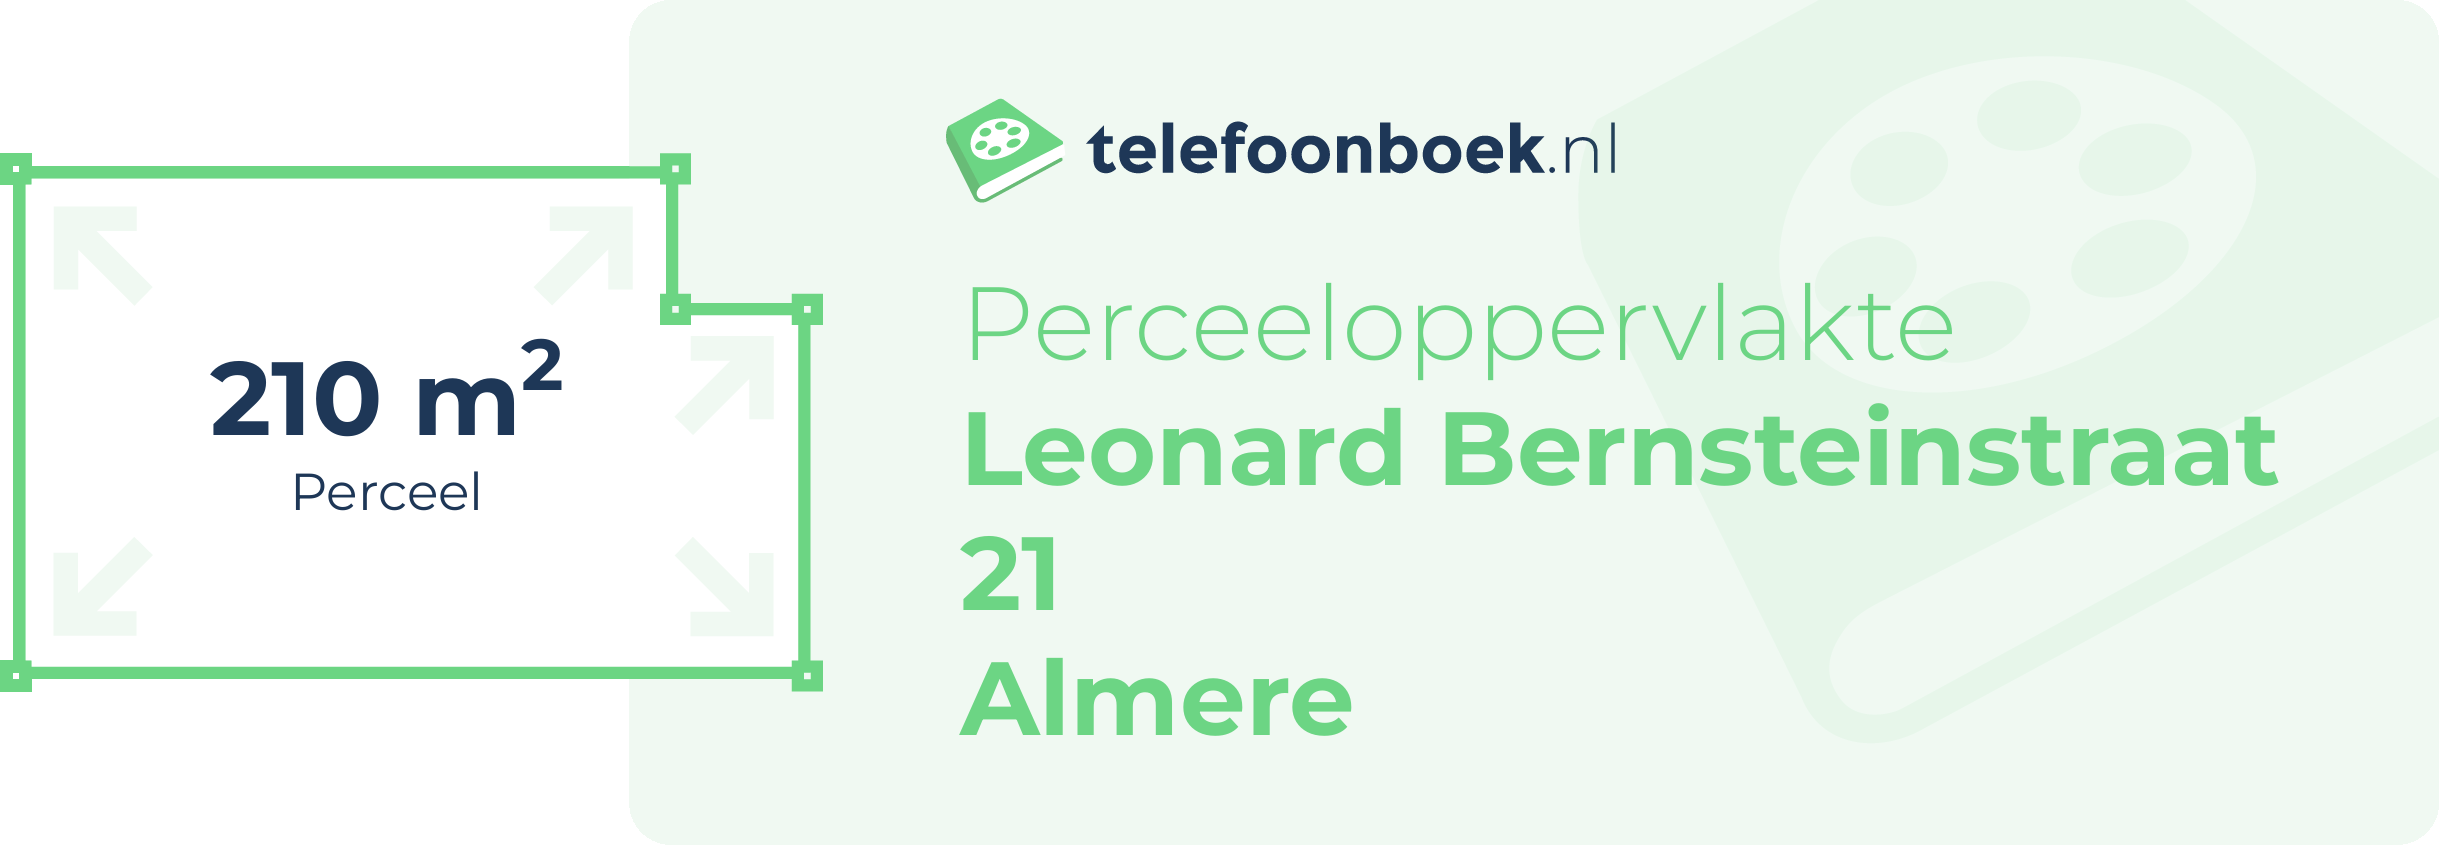 Perceeloppervlakte Leonard Bernsteinstraat 21 Almere